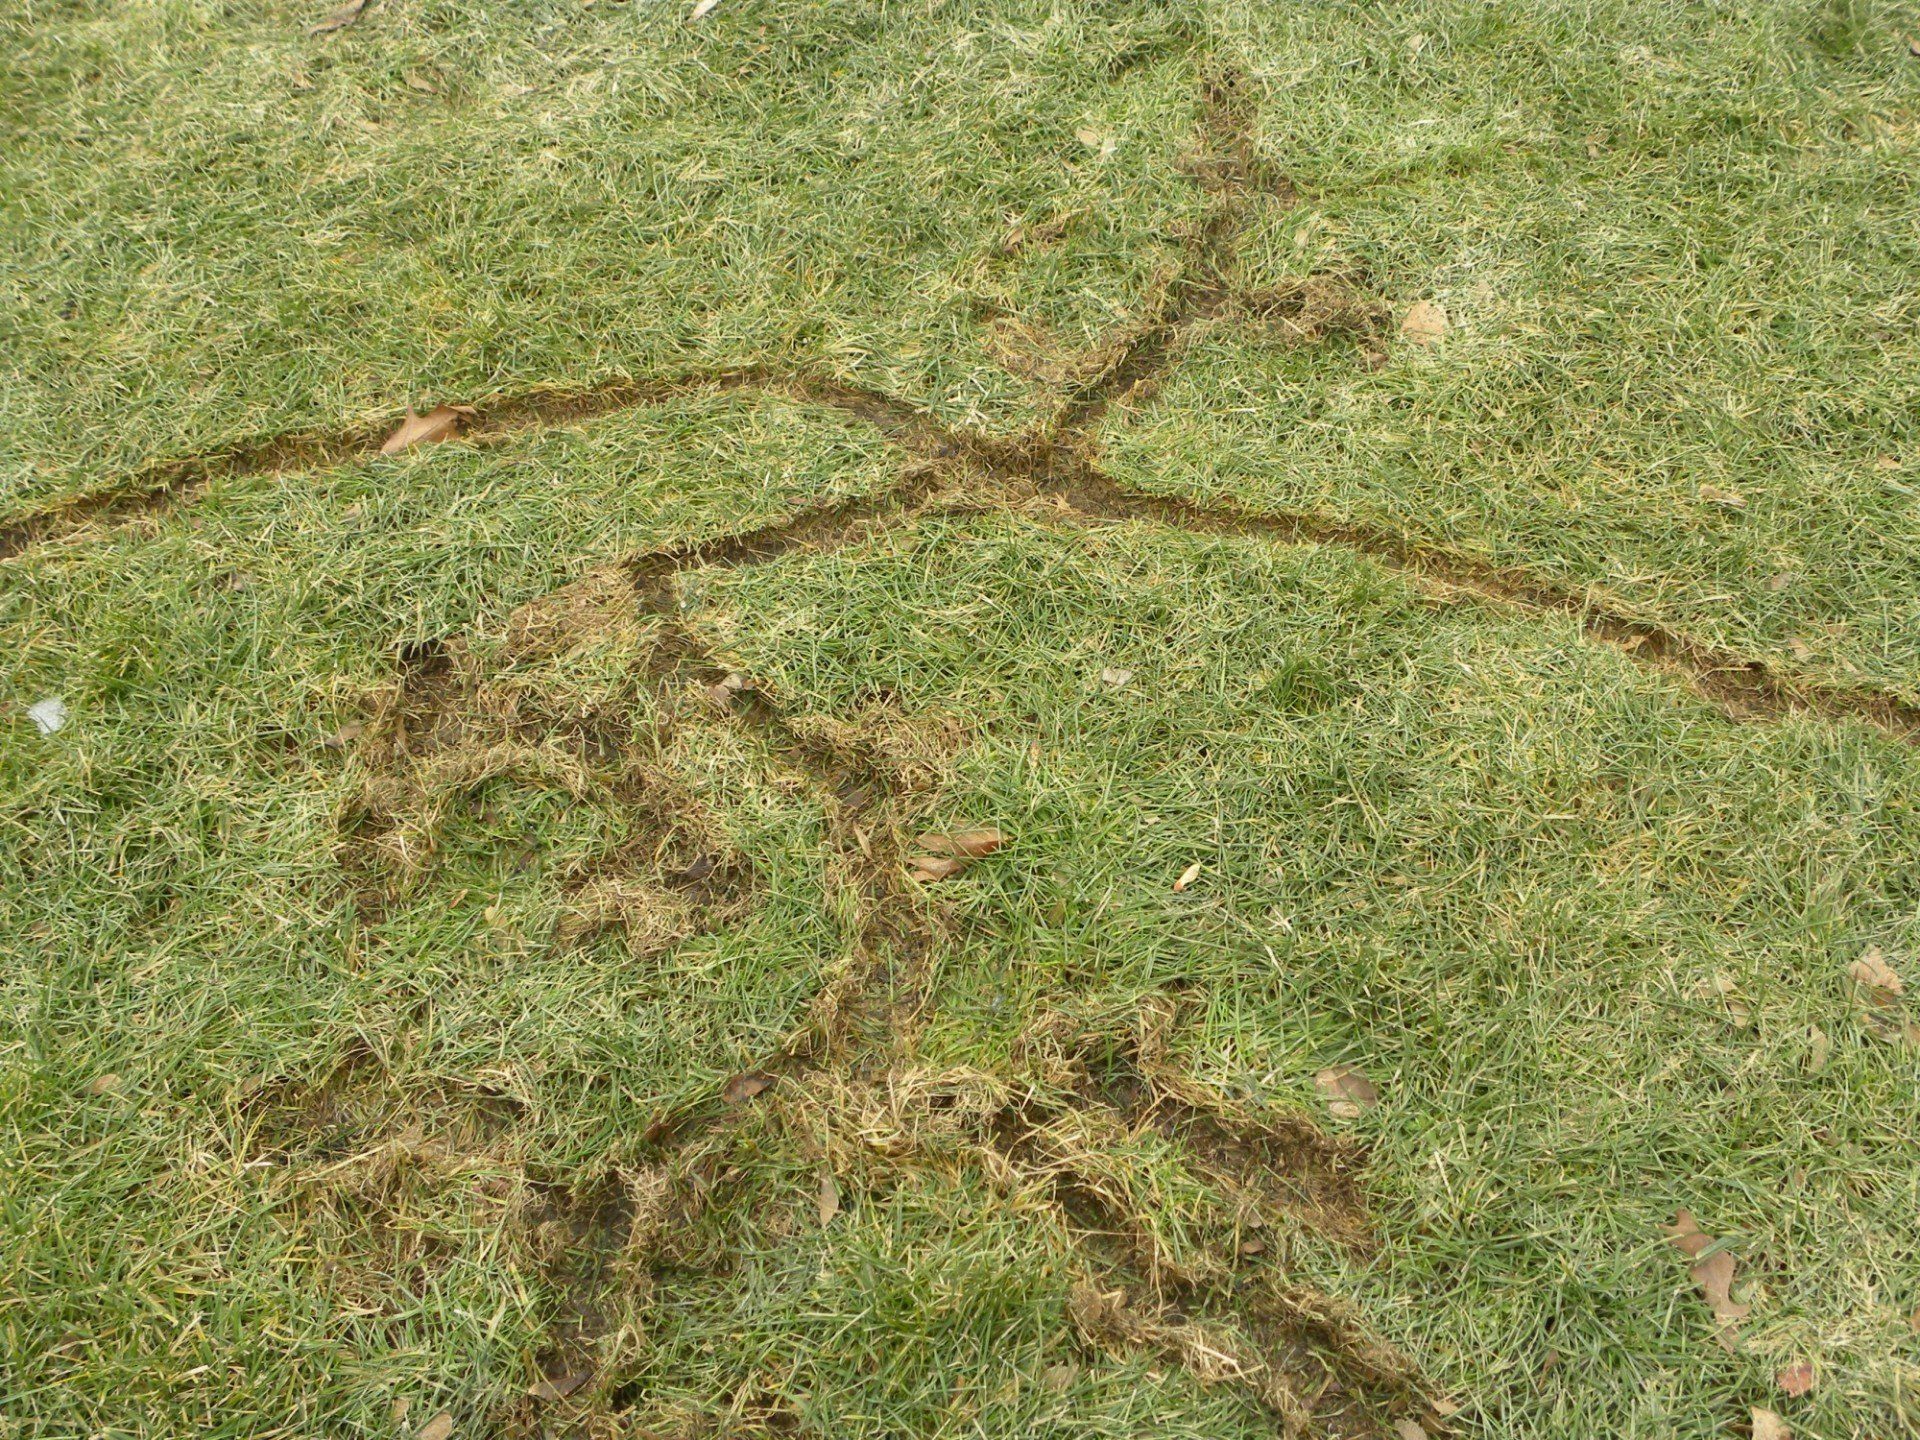 vole burrows damage in lawn